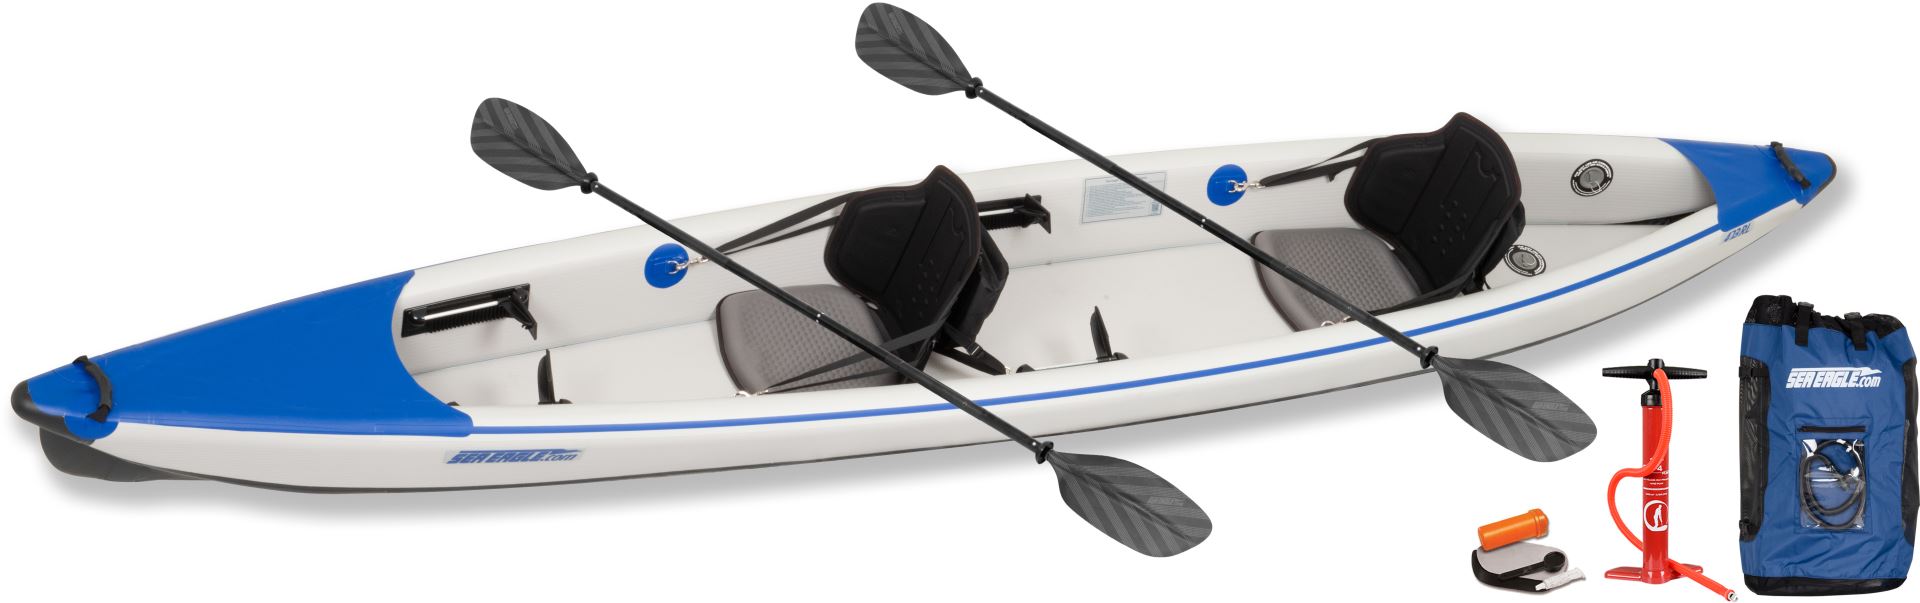 RazorLite™ 473rl Inflatable Kayak Pro Carbon Tandem Package by SeaEagle 473RLK_PC SeaEagle